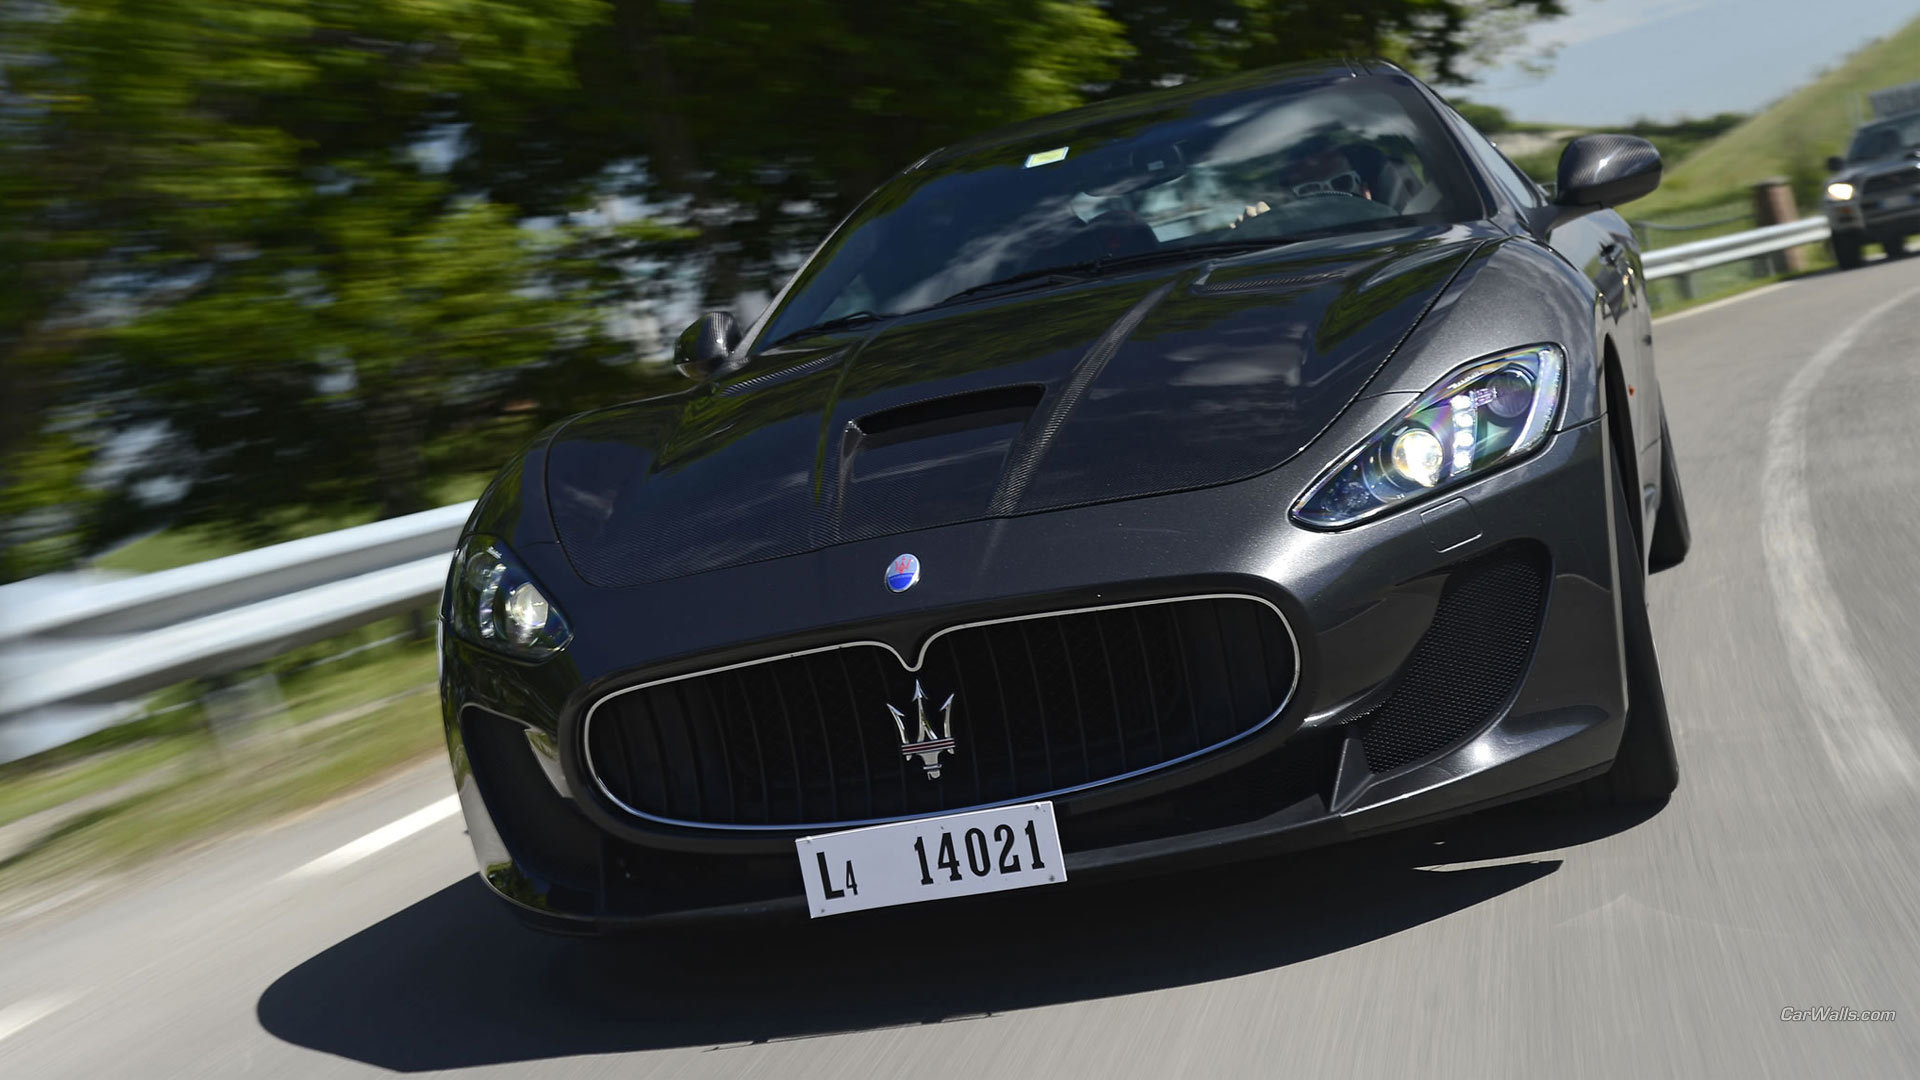 Awesome Maserati GranTurismo free background ID:11039 for hd 1920x1080 desktop